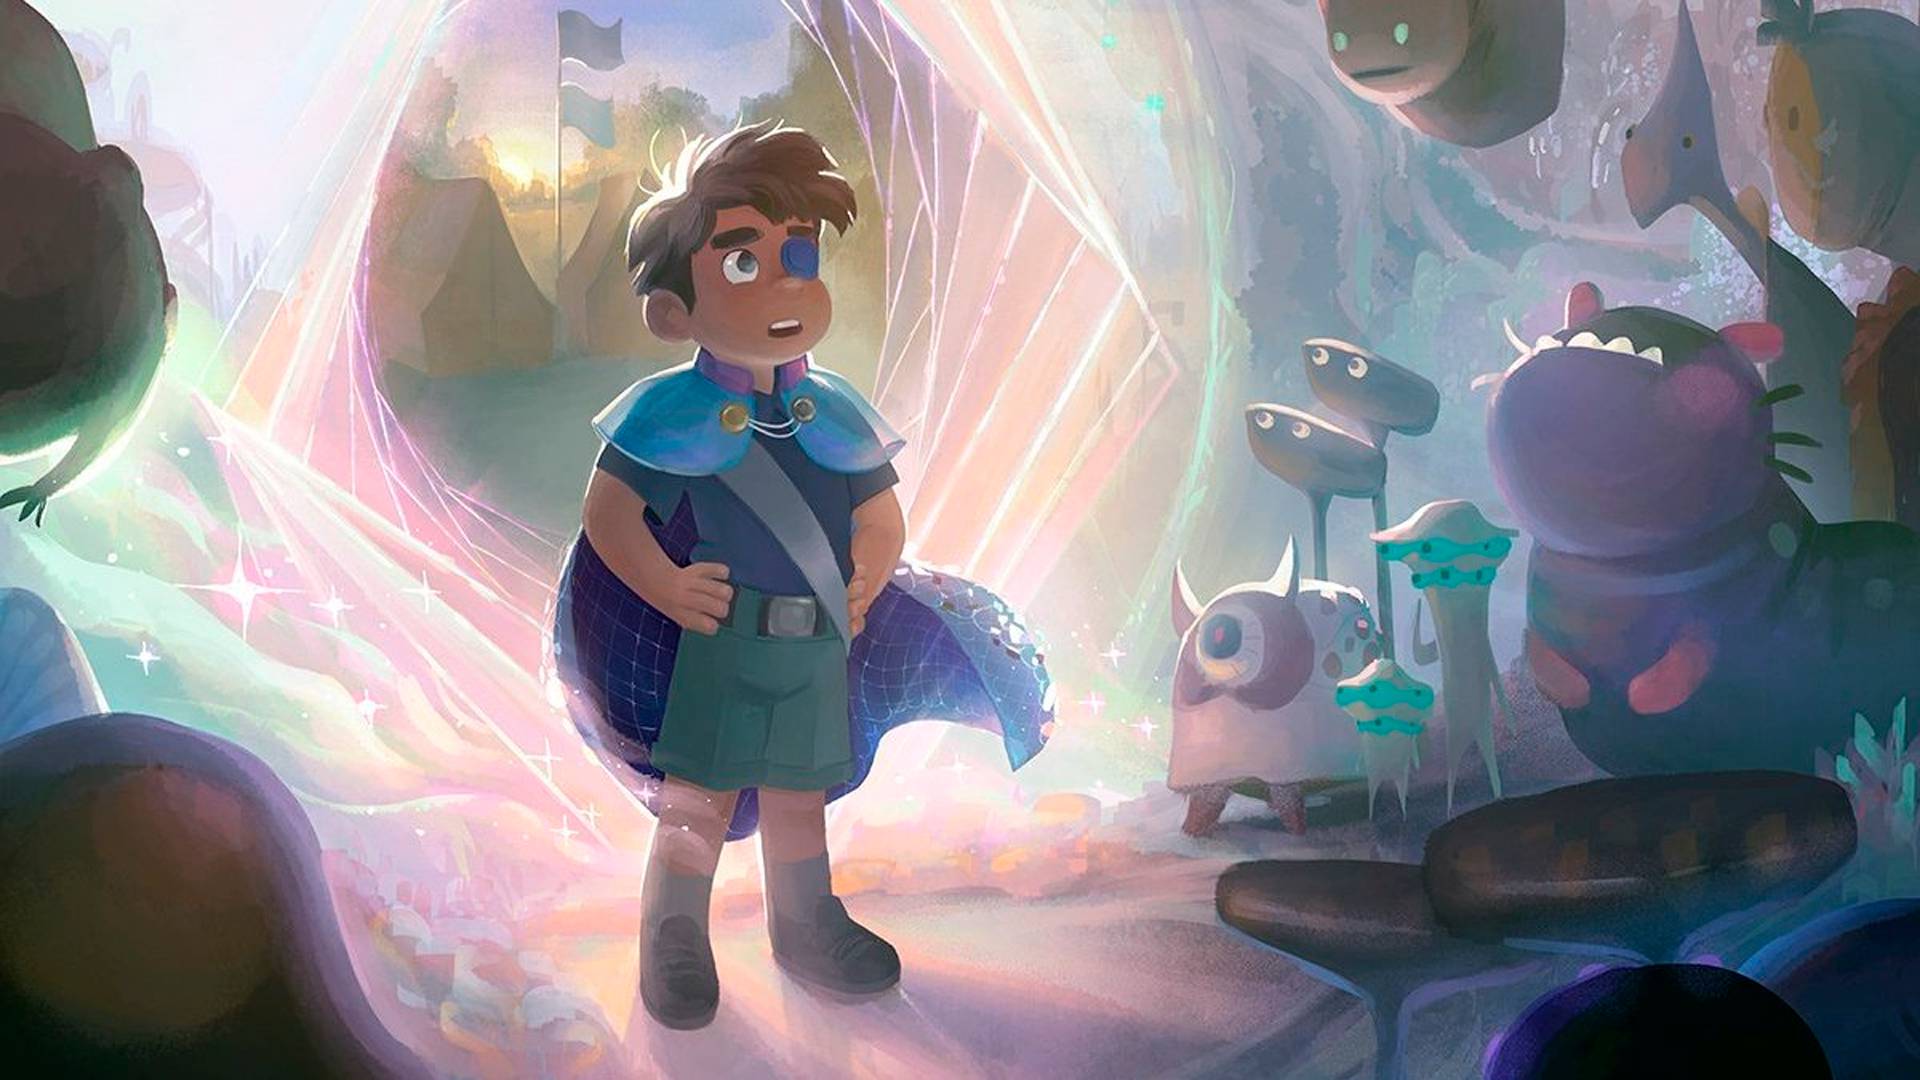 Elio Pixar Luxo Jr trailer poster